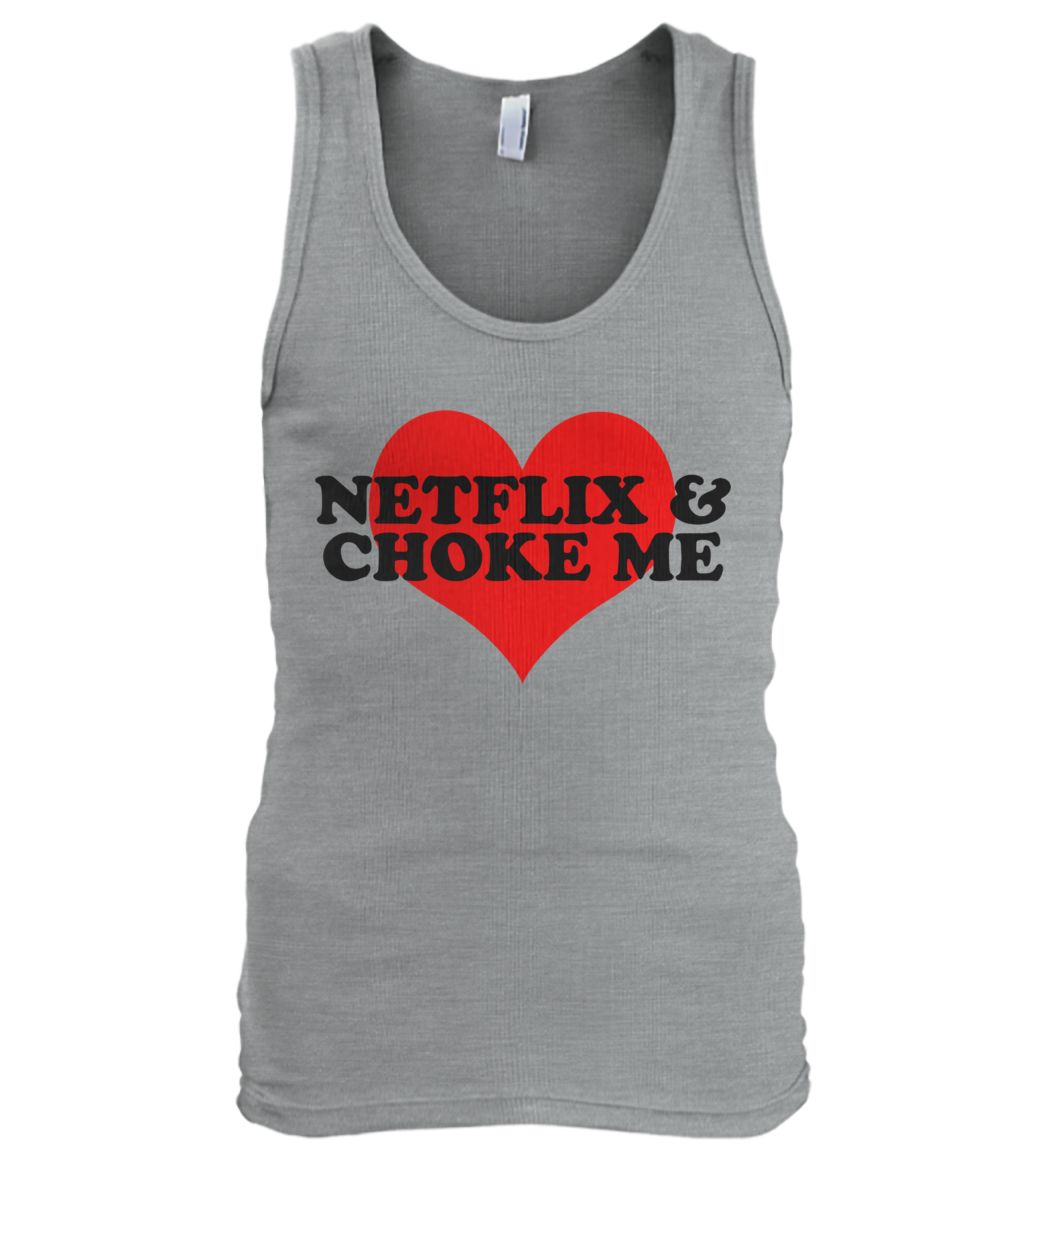 Netflix and choke me men's tank top